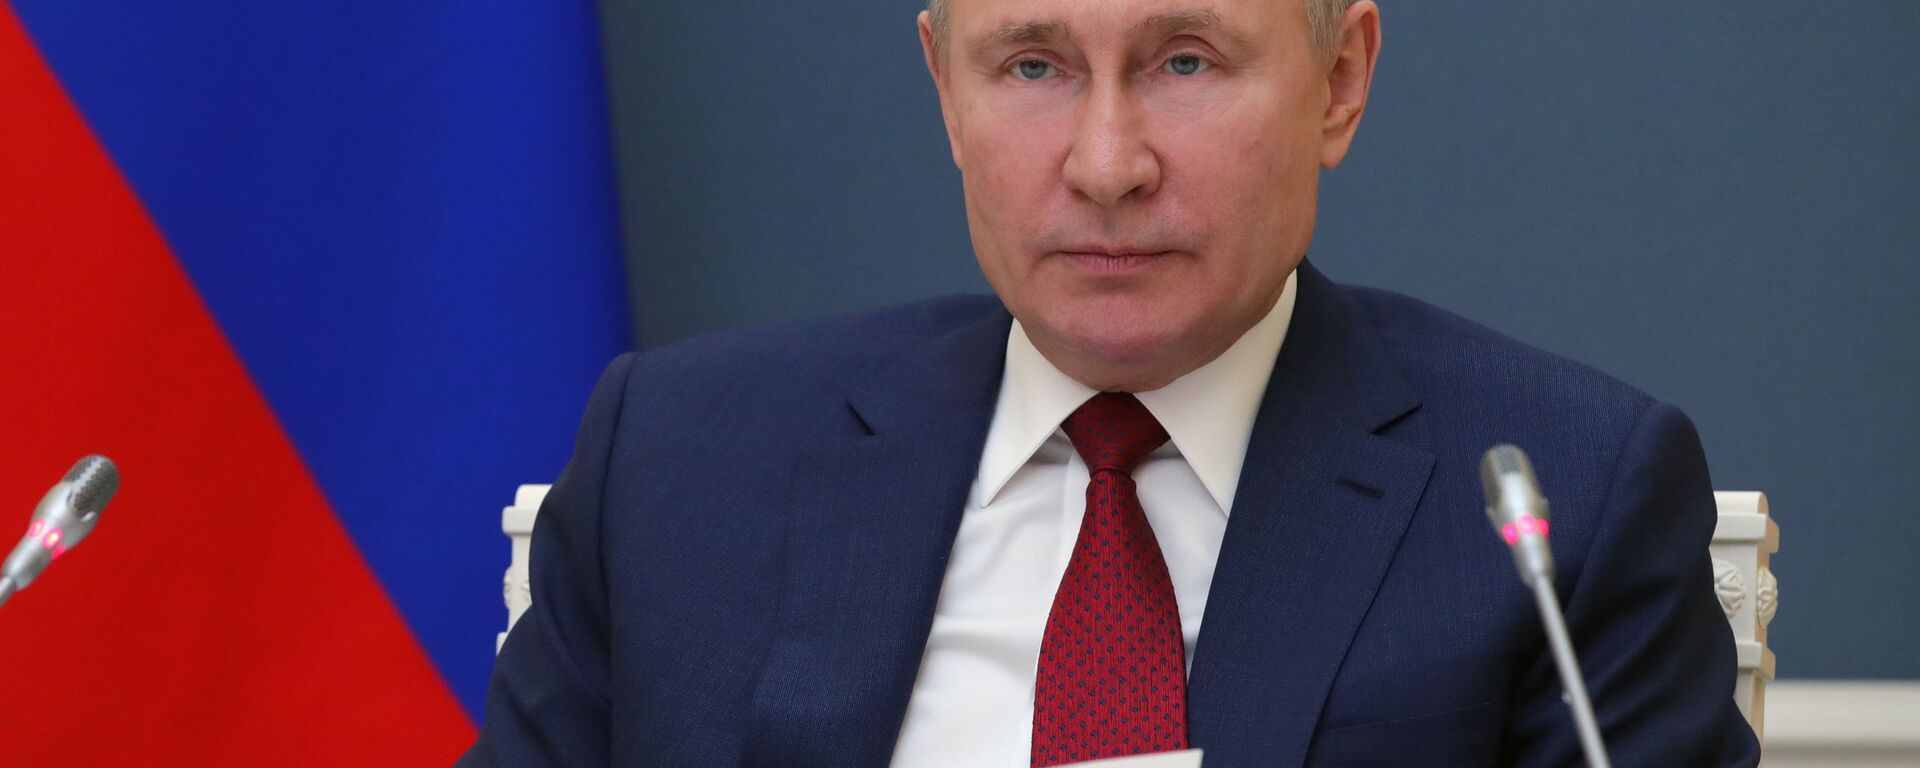 Vladímir Putin, presidente de Rusia - Sputnik Mundo, 1920, 27.01.2021